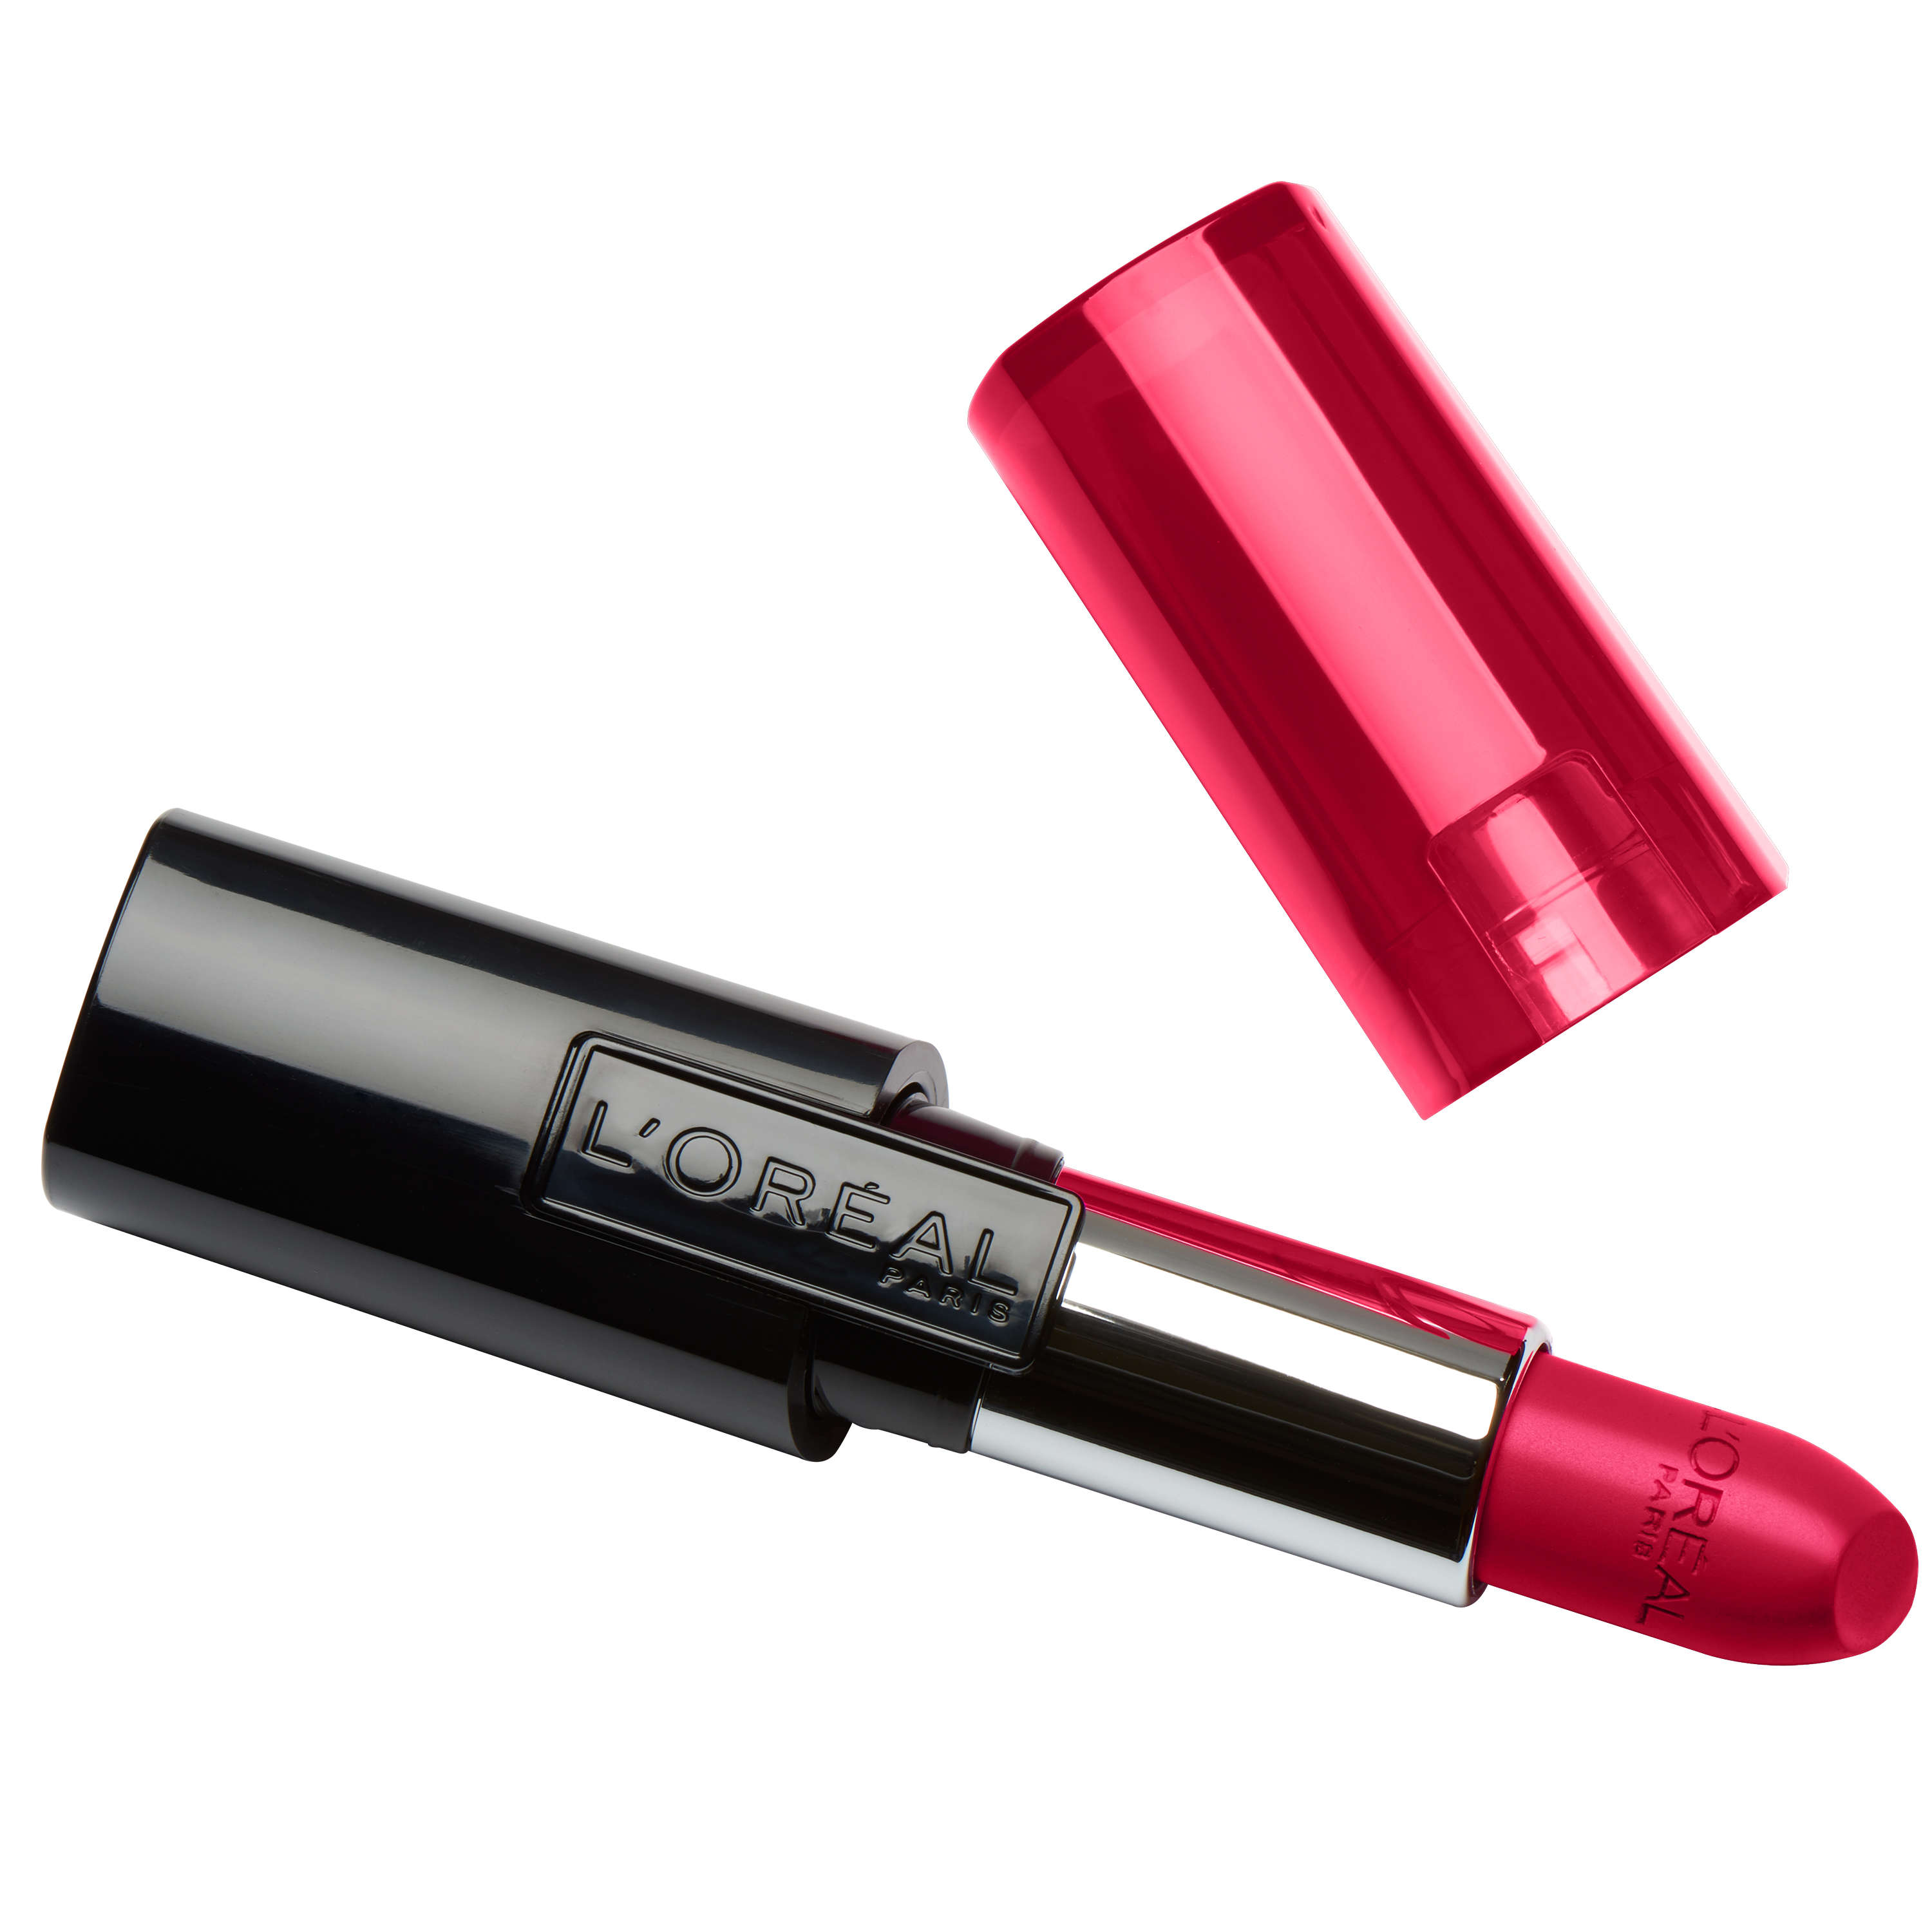 L'Oreal Paris Infallible Le Rouge Lipstick, Ravishing Red - image 1 of 4